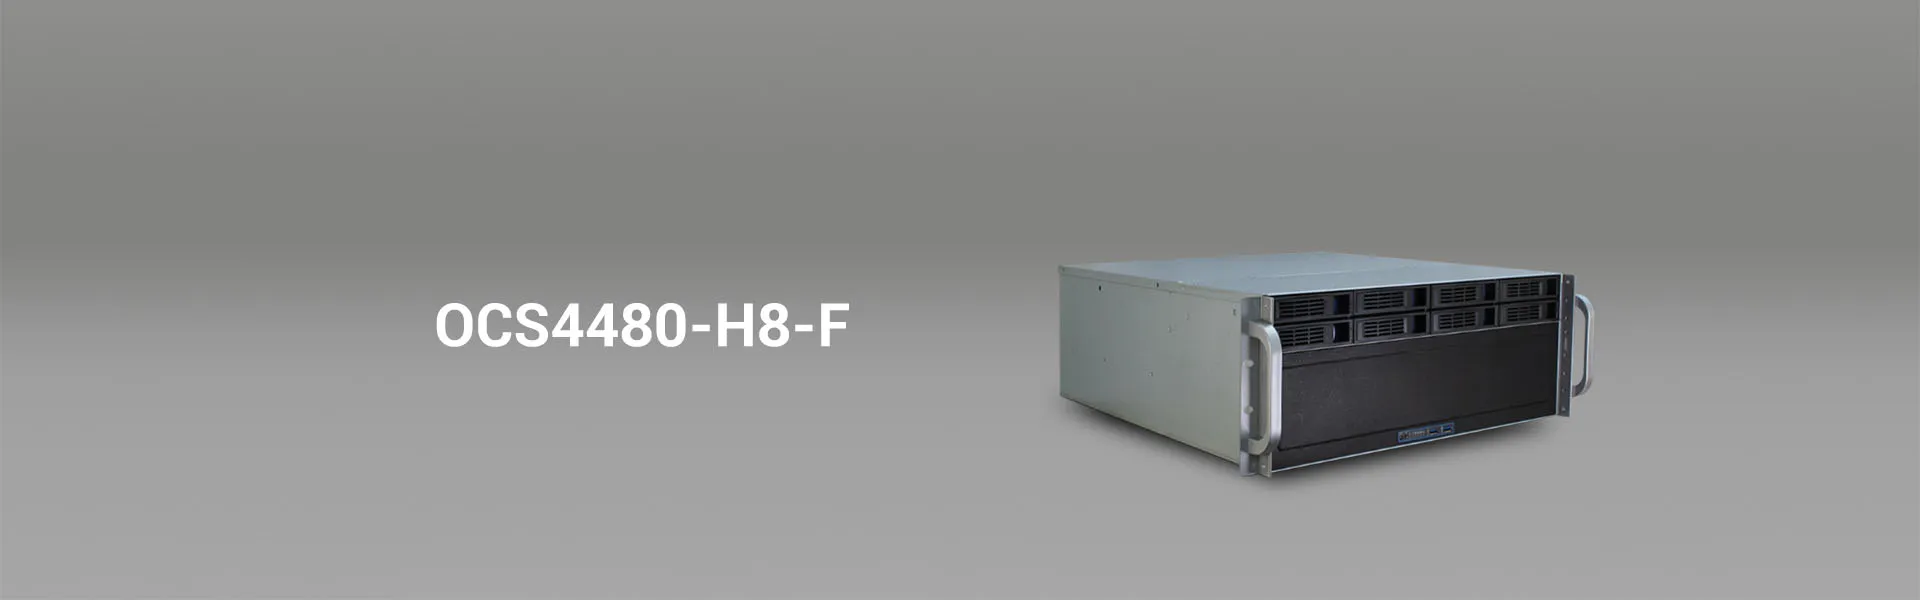 4U hot-swappable, server case, OCS4480-H8-F, onechassis.com